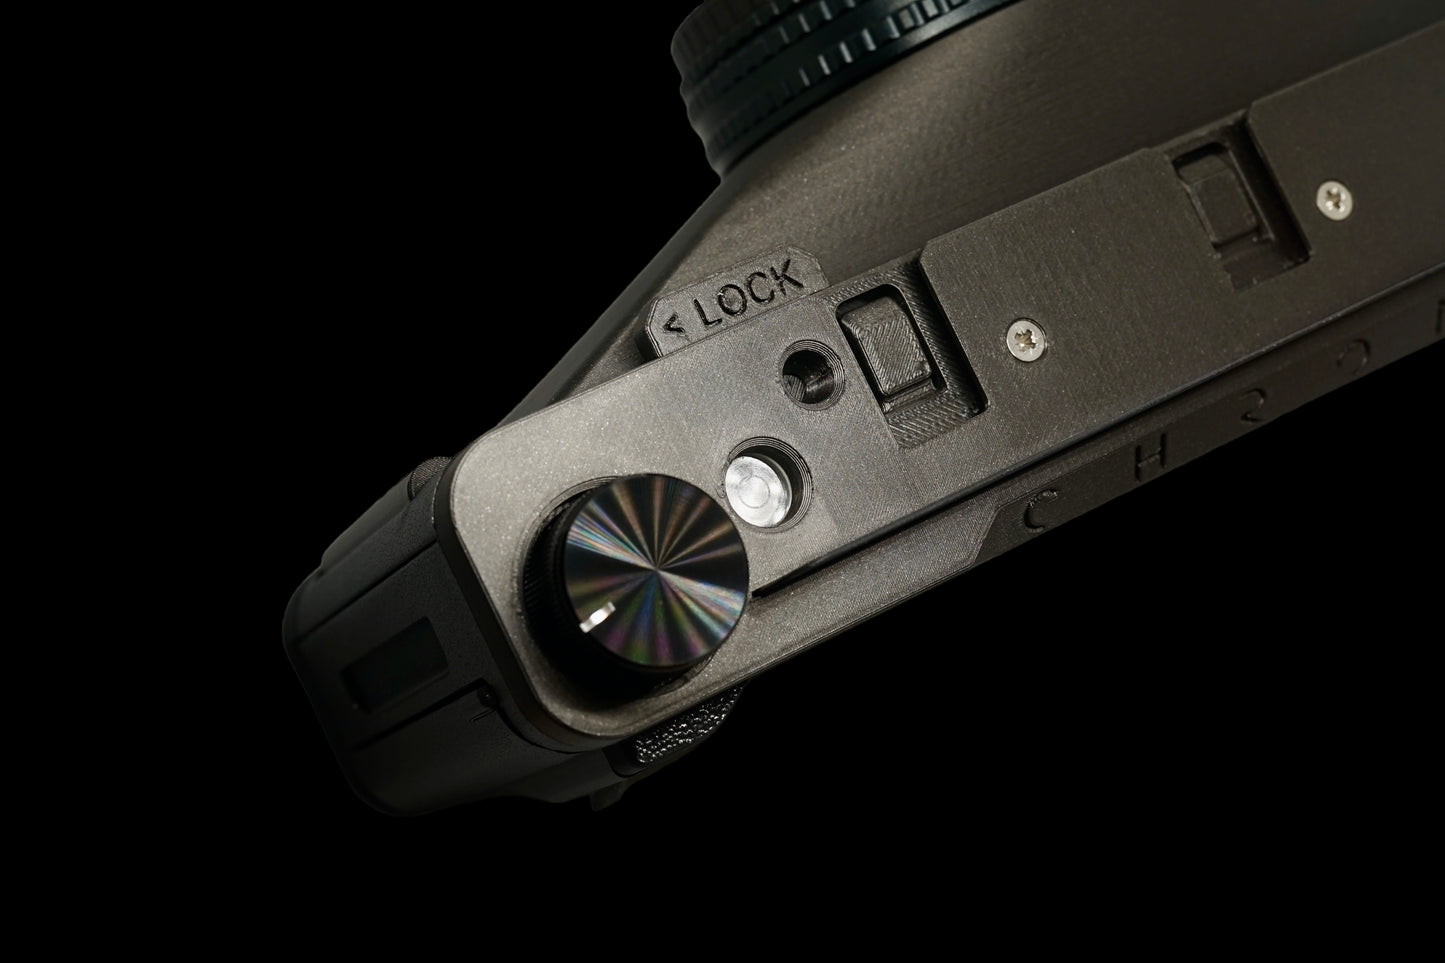 Six:17 Camera & Lens Cone of Choice